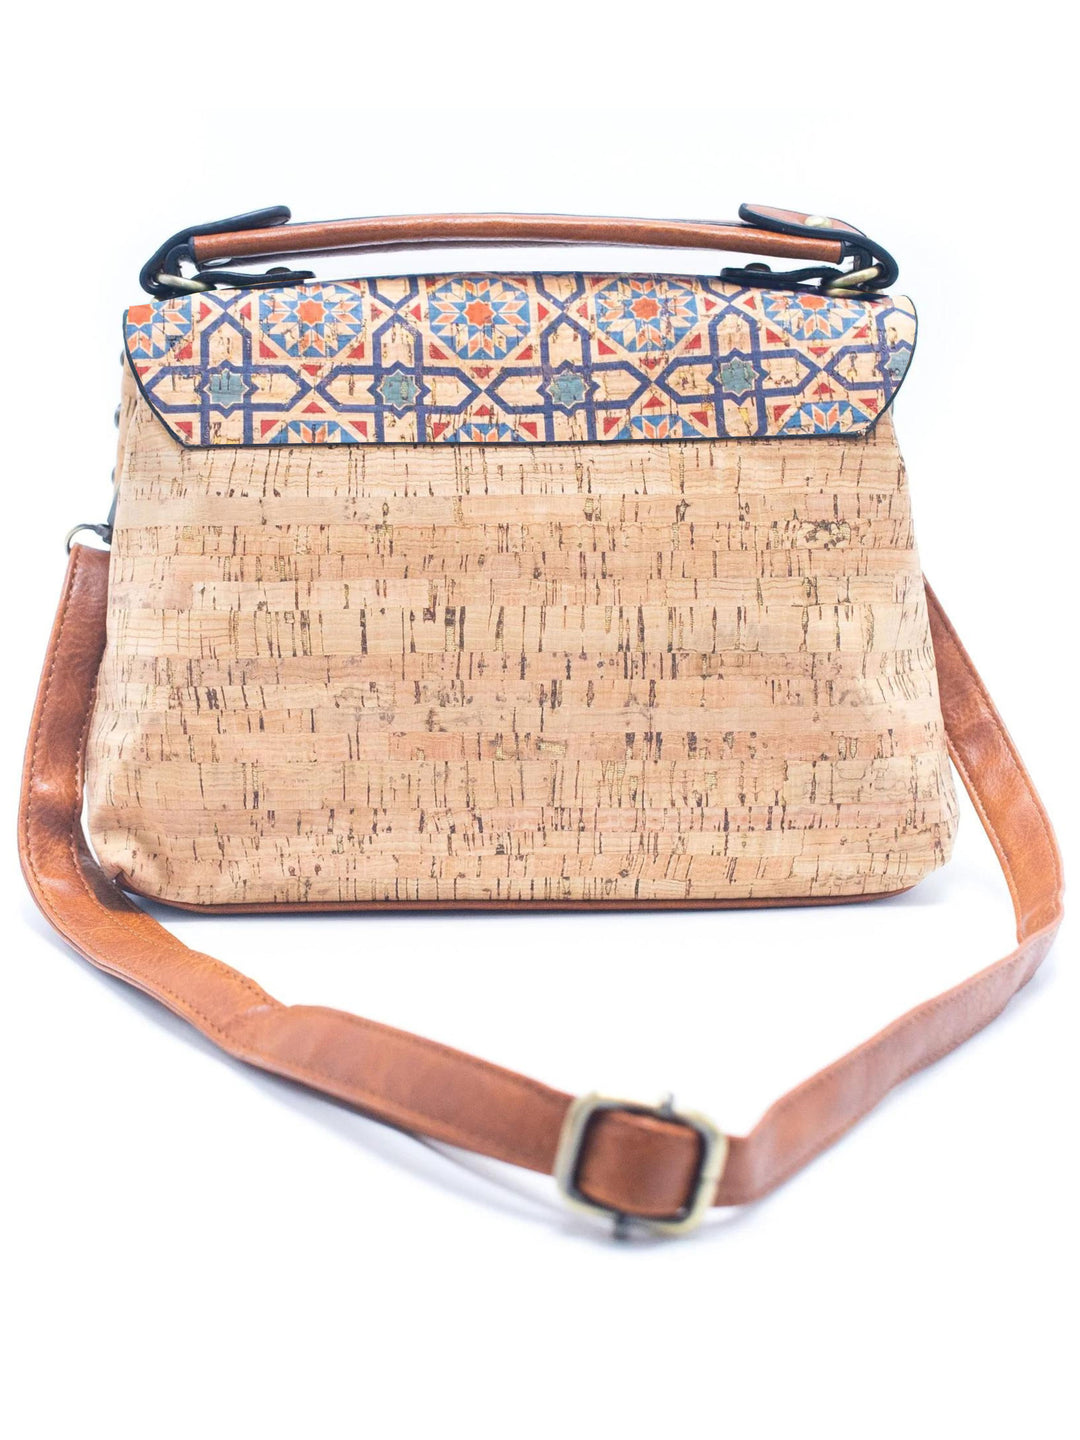 Mosaic Tiles Handmade Portuguese Cork Purse Crossbody Shoulder Bag